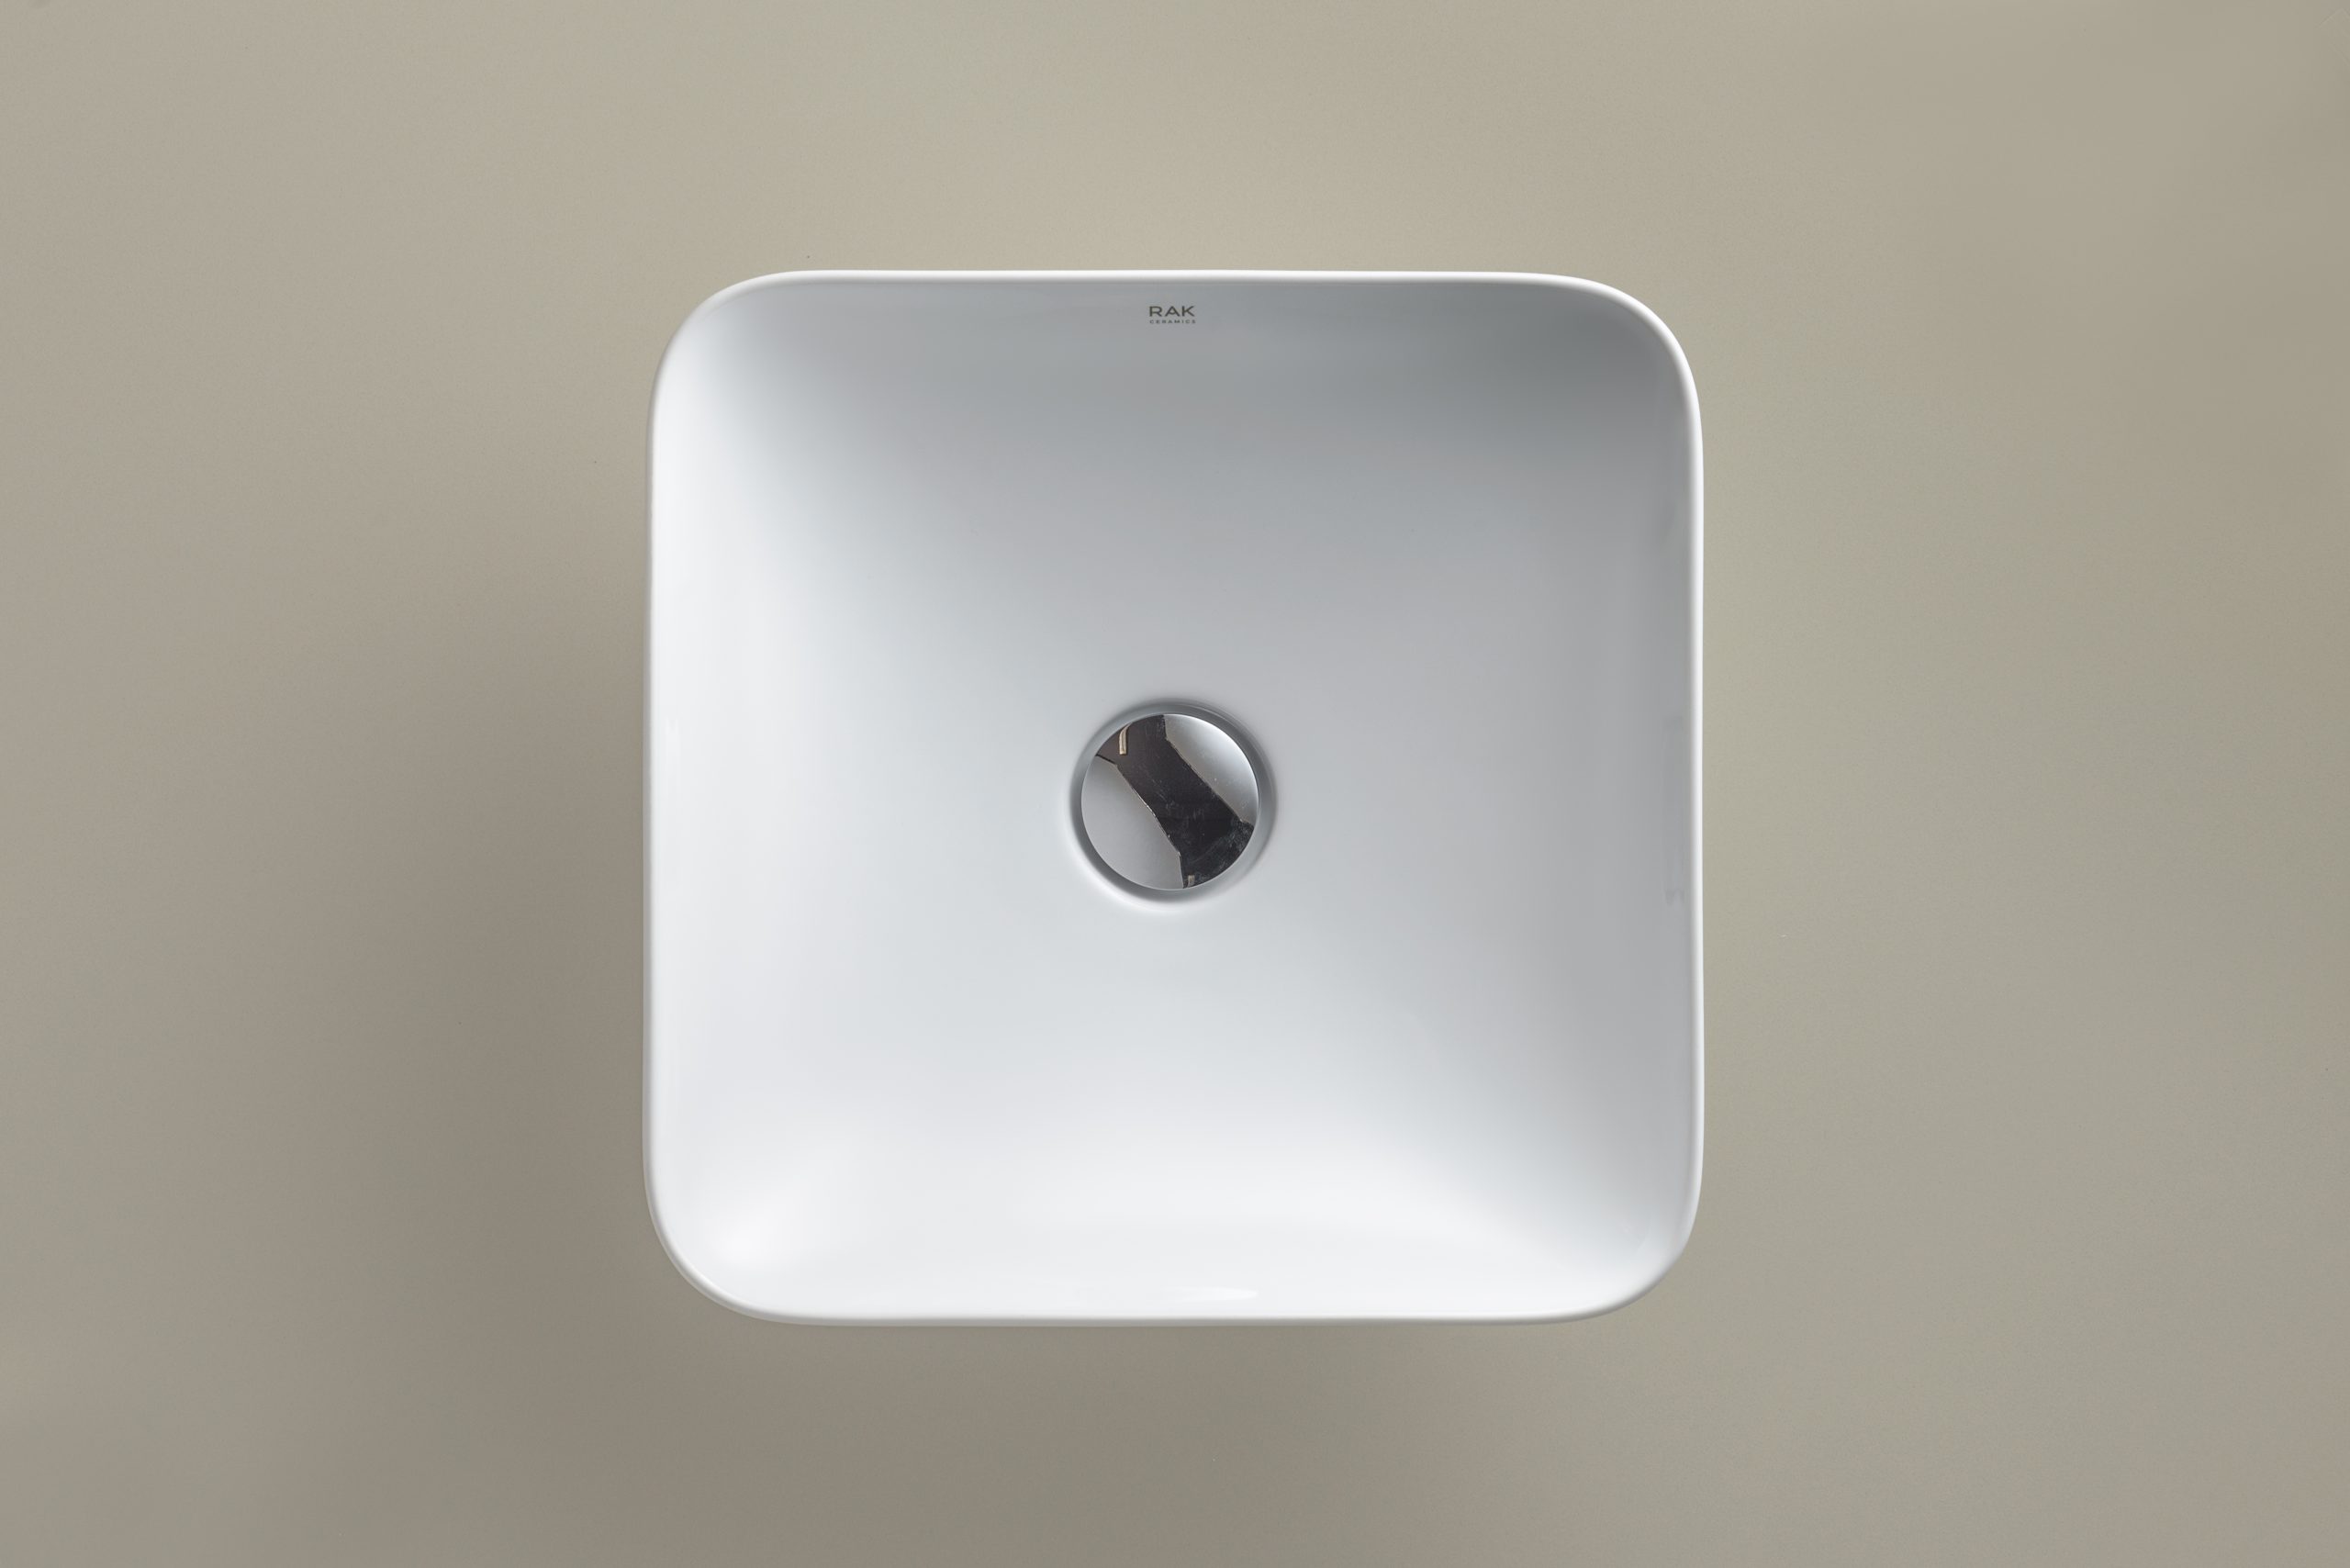 Square Variant washbasins designed by Debiasi Sandri for RAK Ceramics